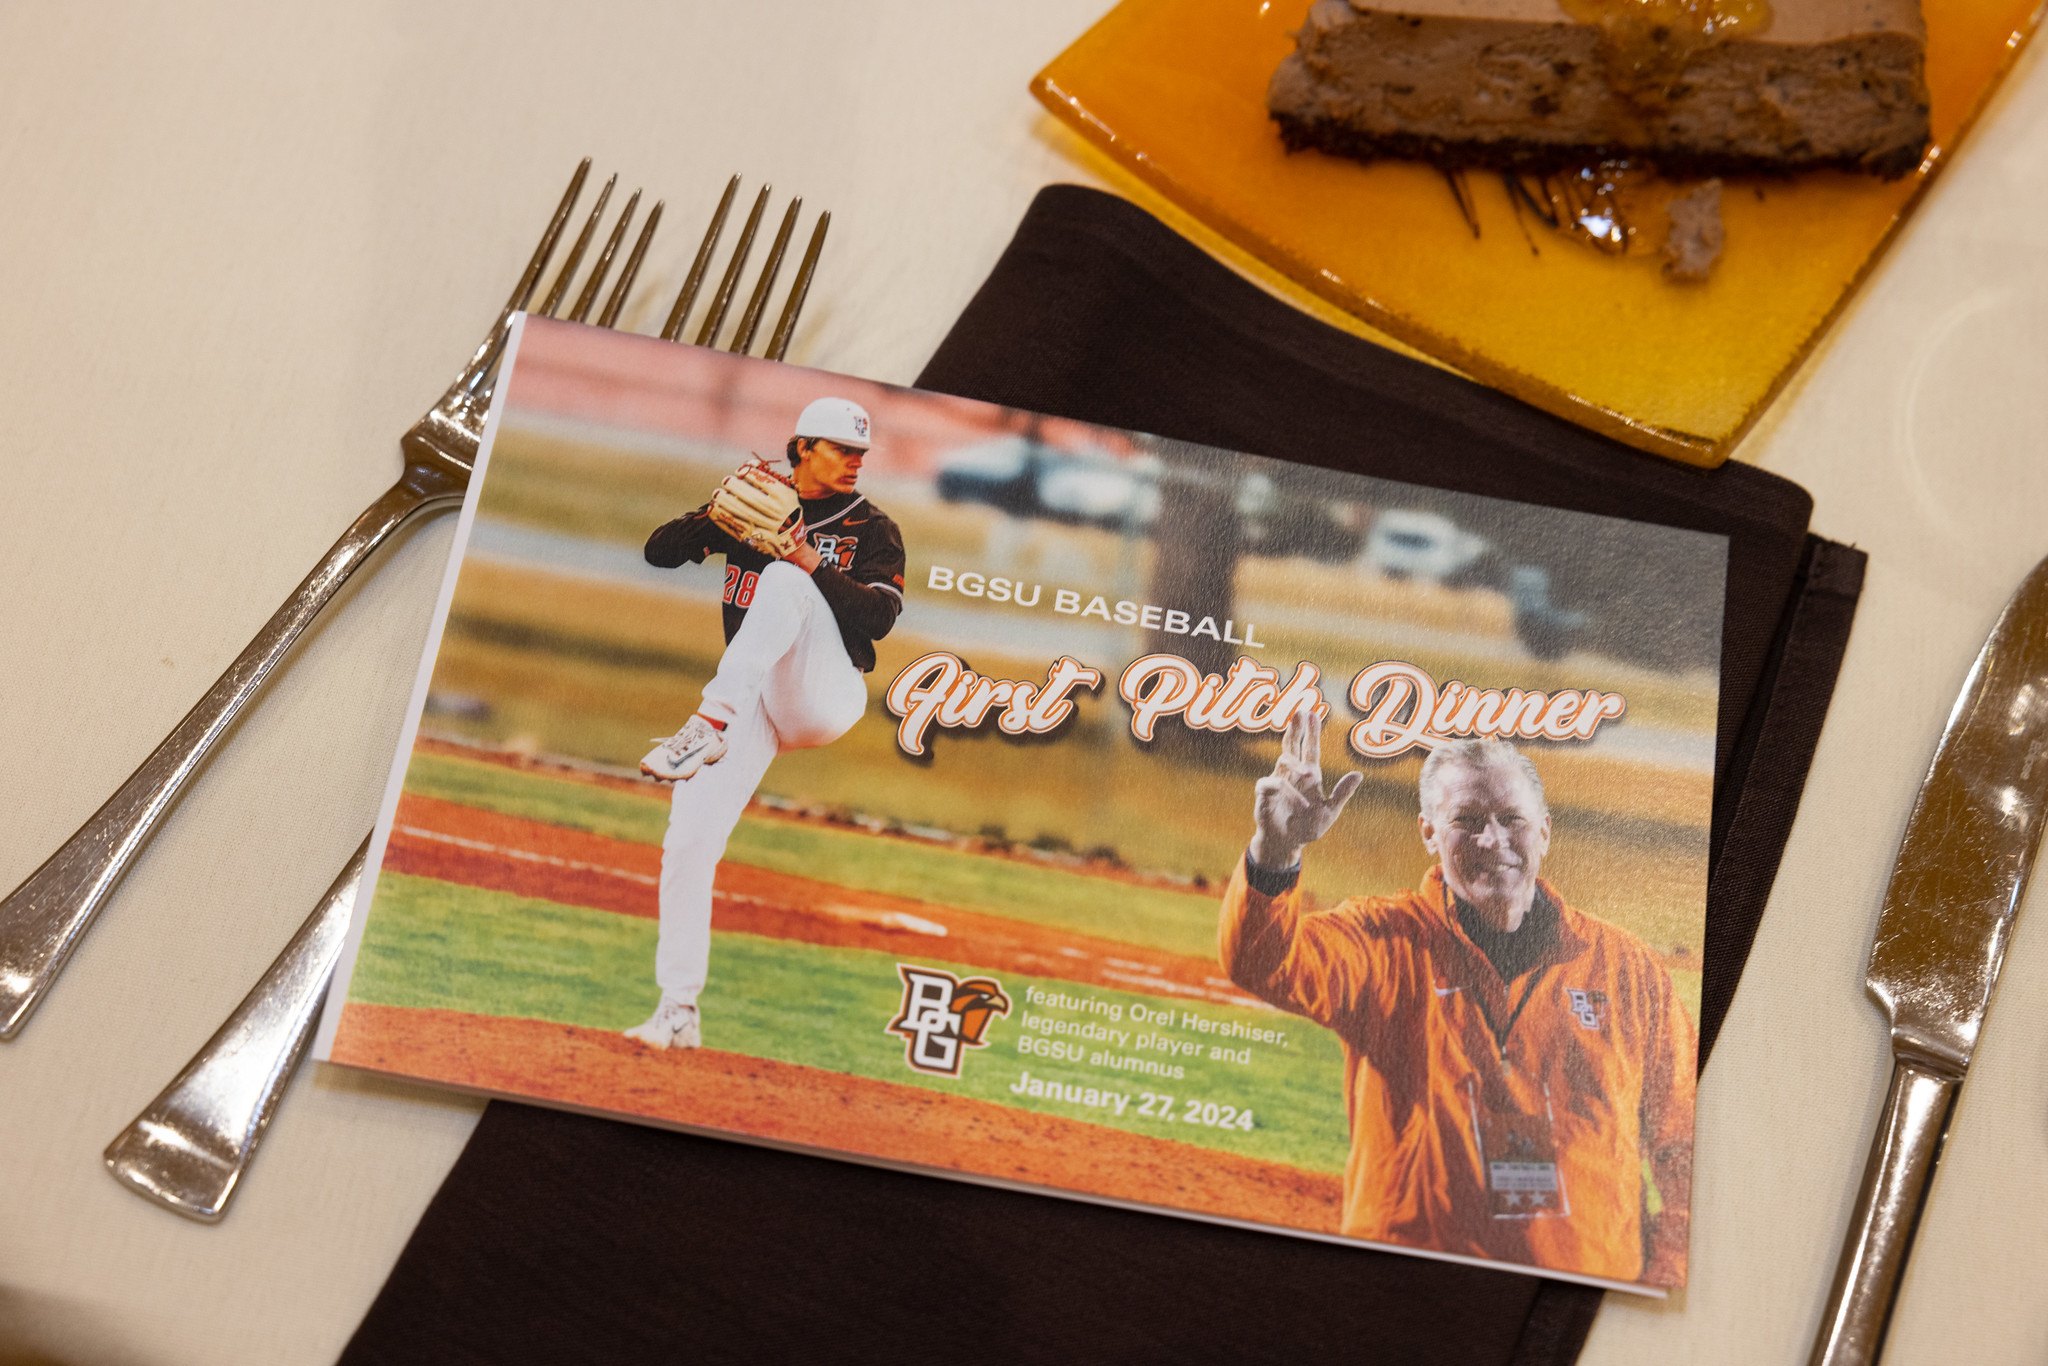 A program with the words: BGSU Baseball First Pitch Dinner, featuring Orel Hershiser, legendary player and BGSU alumnus, January 27, 2024